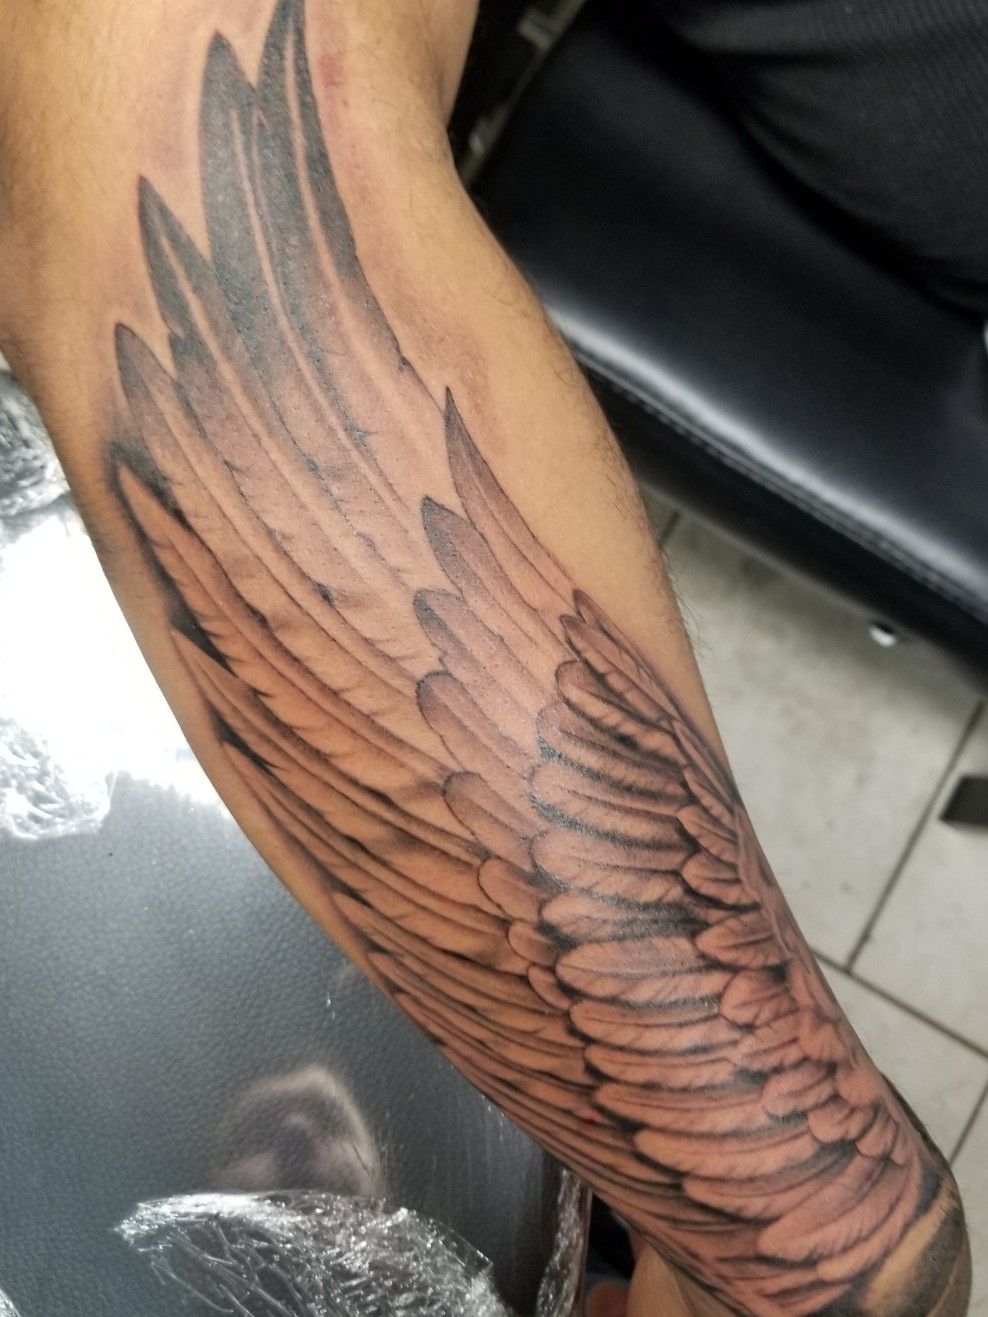 Tattoo uploaded by Julio • Wing on arm • Tattoodo